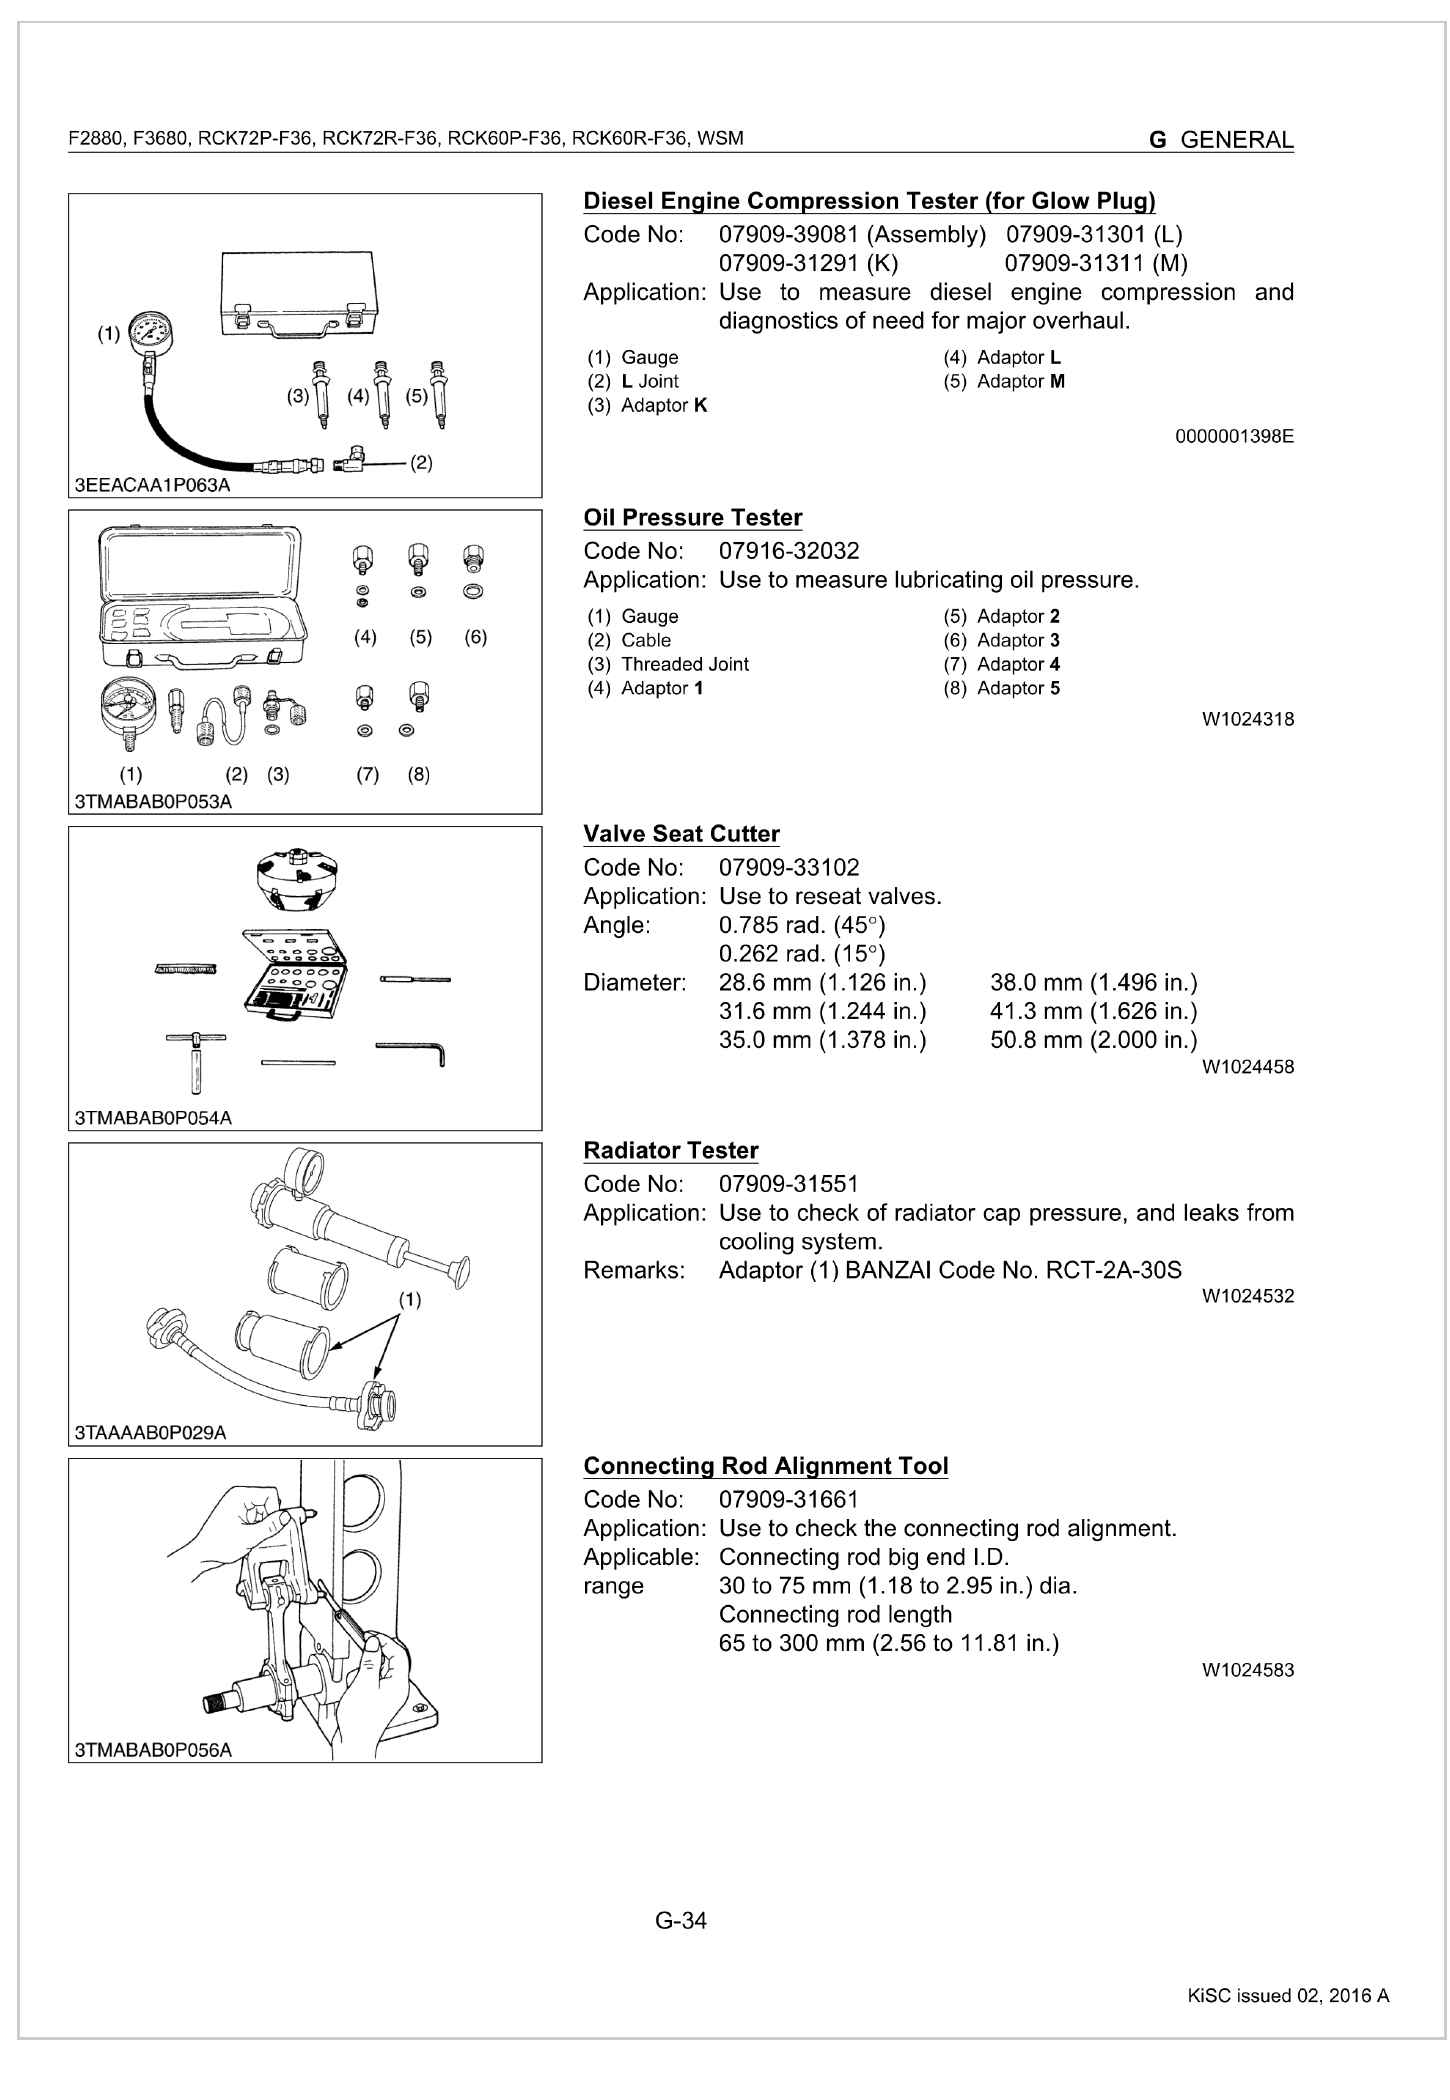 Kubota Rotary Mower RCK72R-F36 Workshop Manual 2016 | Auto Repair ...